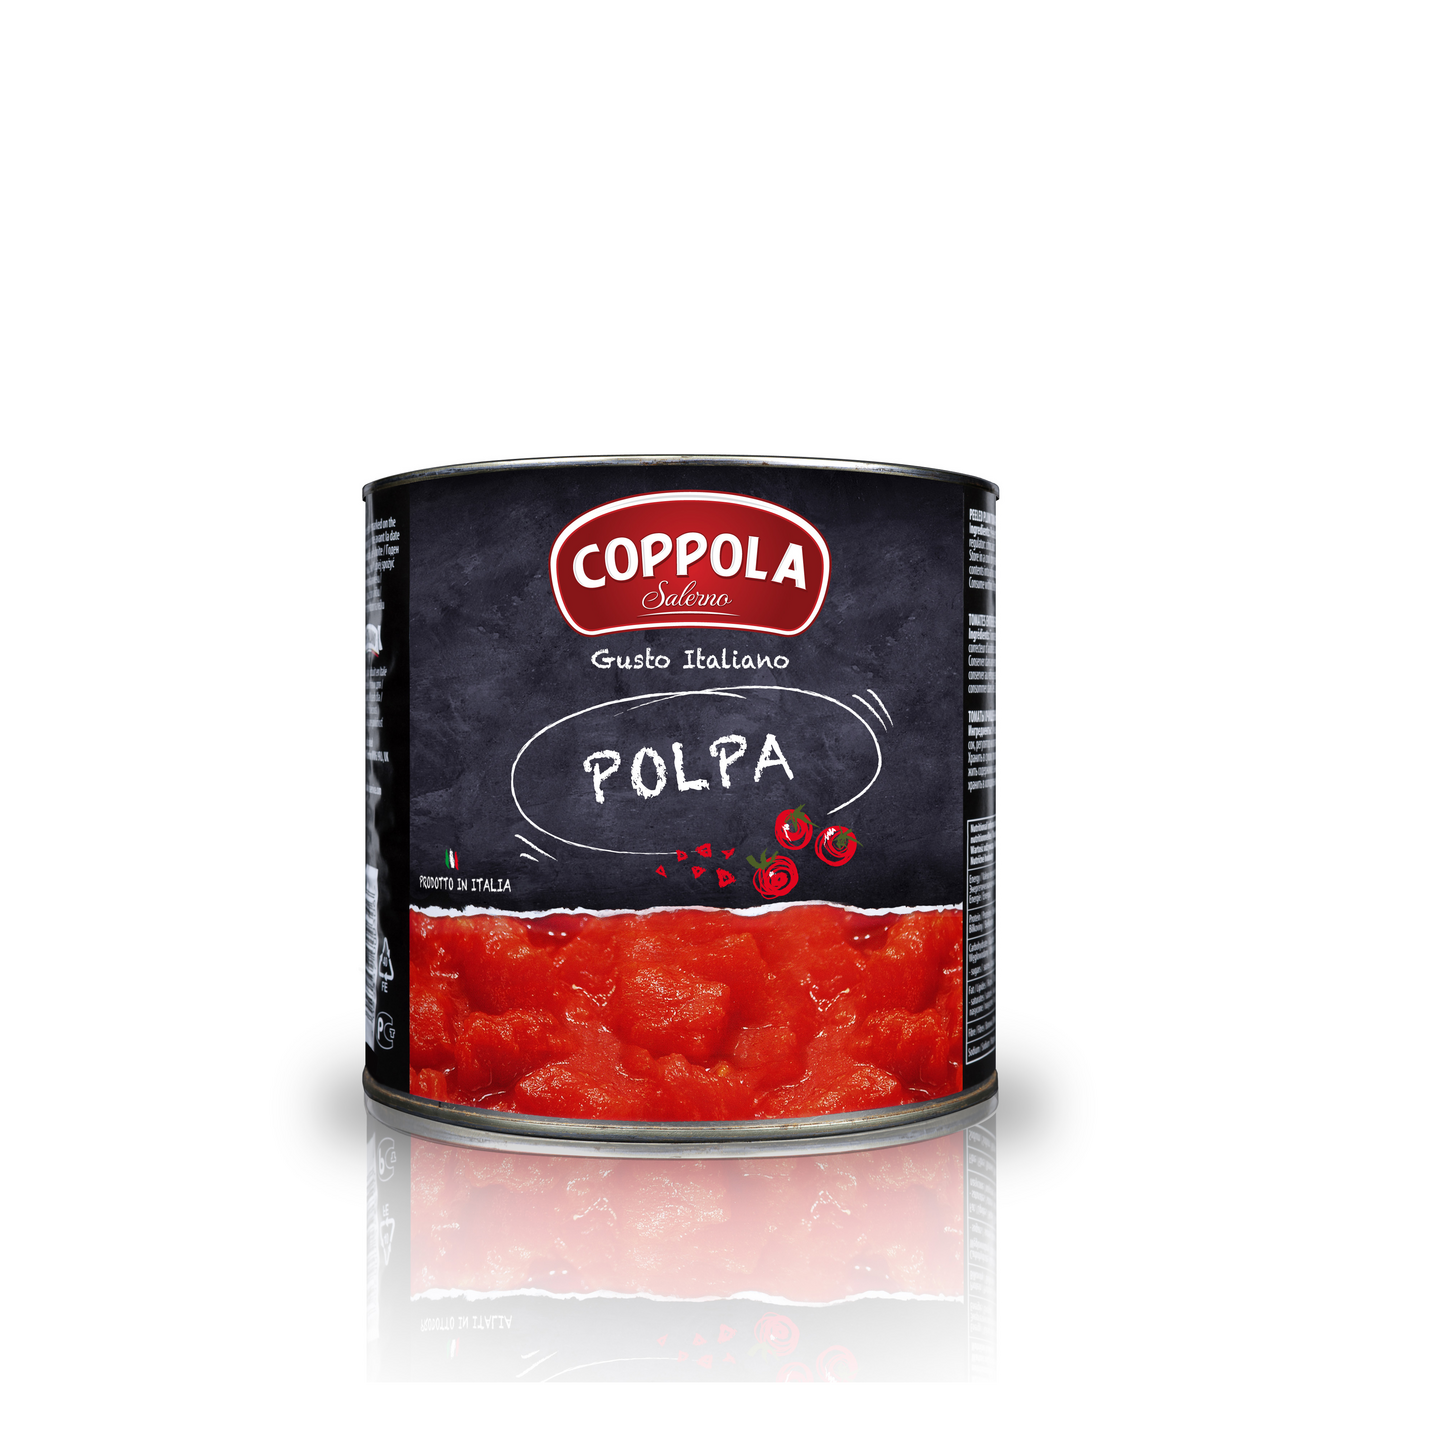 Coppola Polpa tomaattimurska 2,5kg